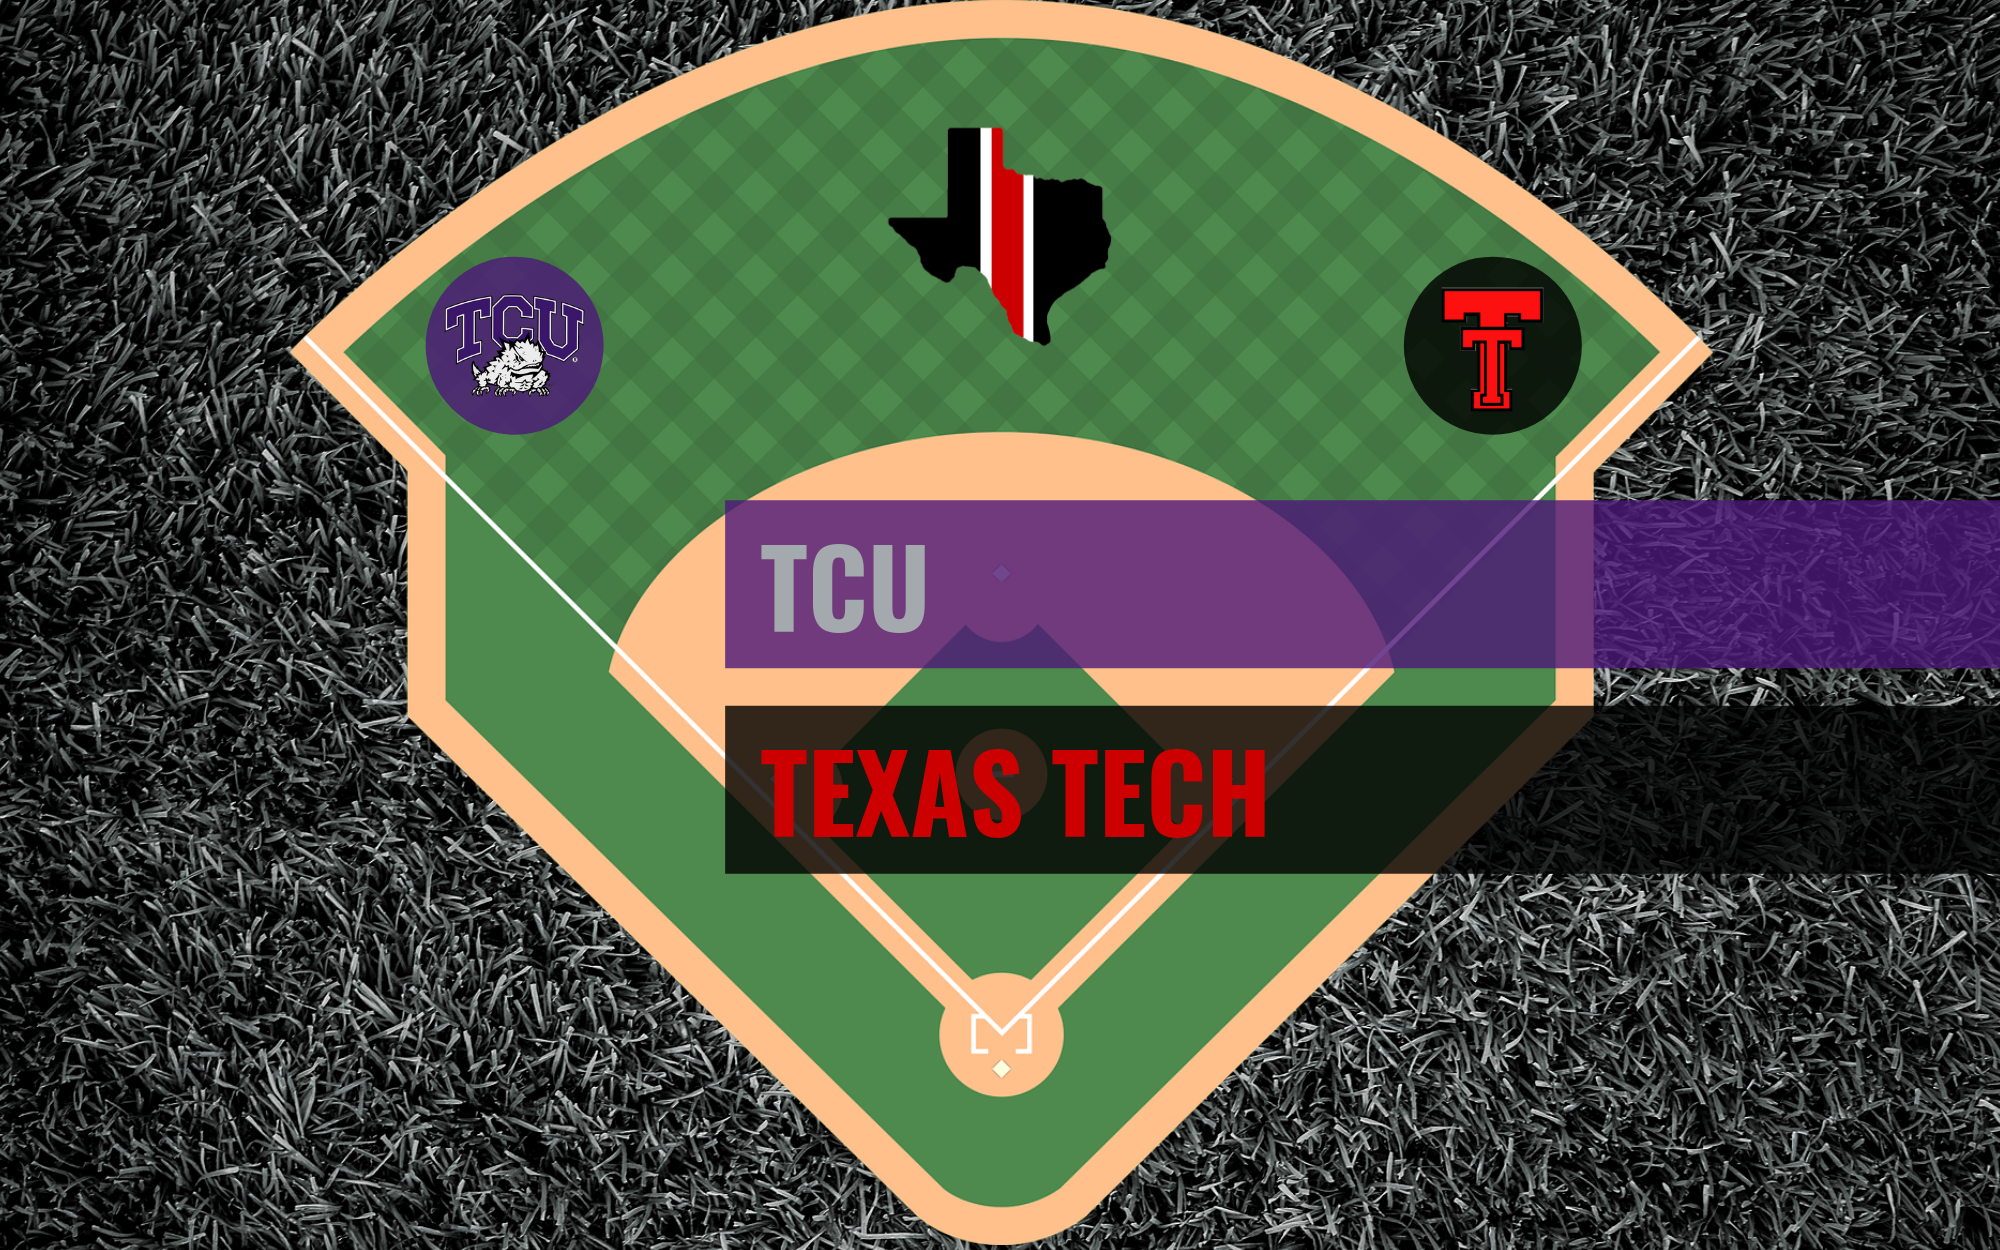 Preview & Series Thread: TCU vs. Texas Tech